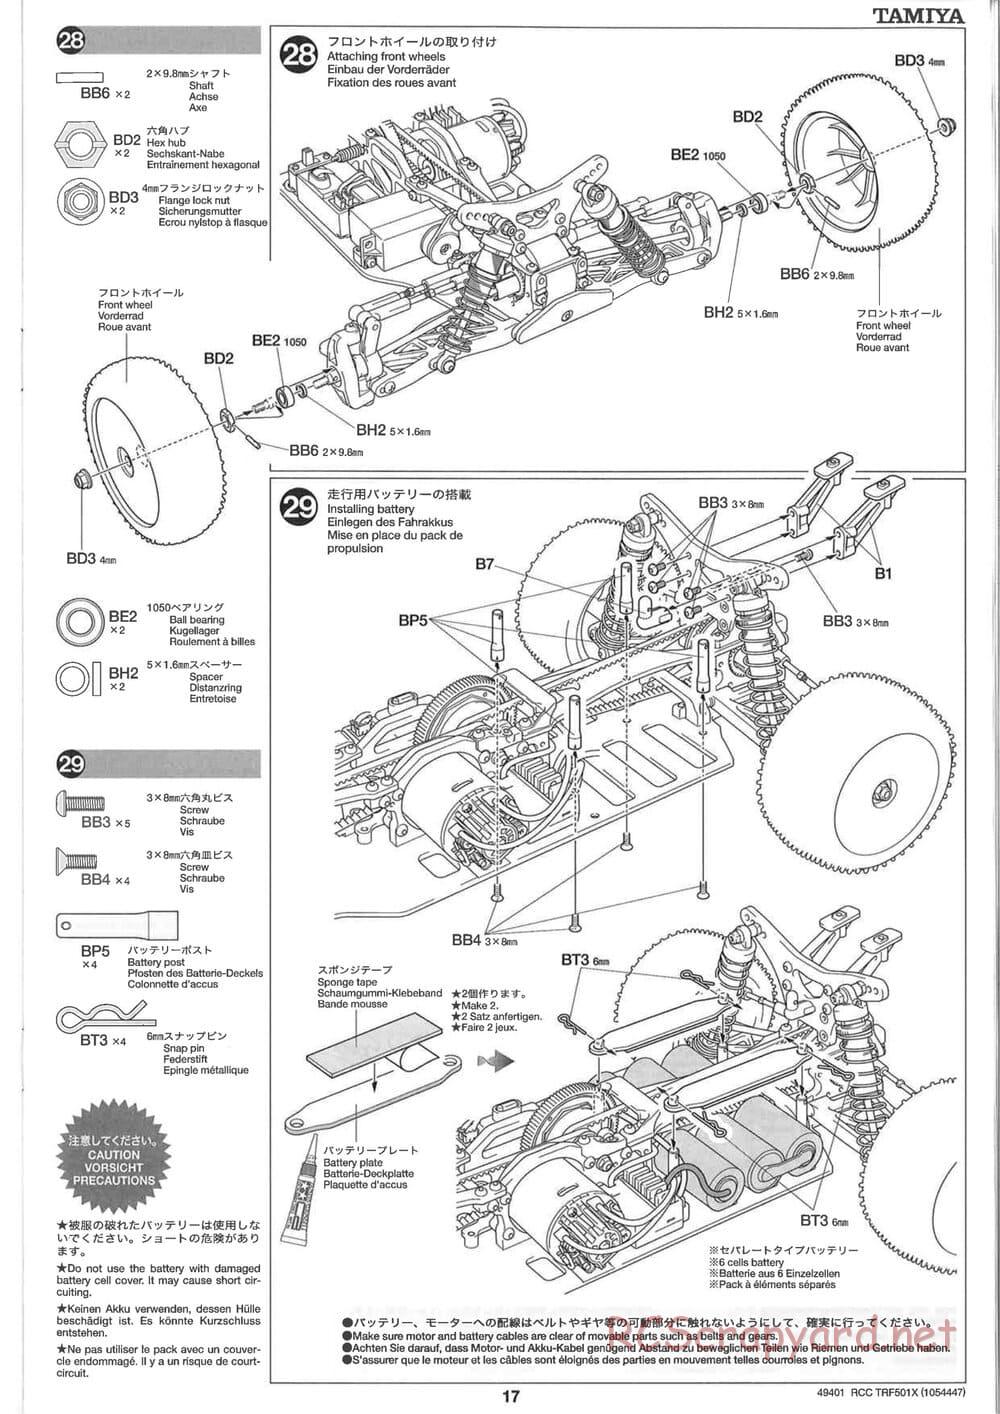 Tamiya - TRF501X Chassis - Manual - Page 17